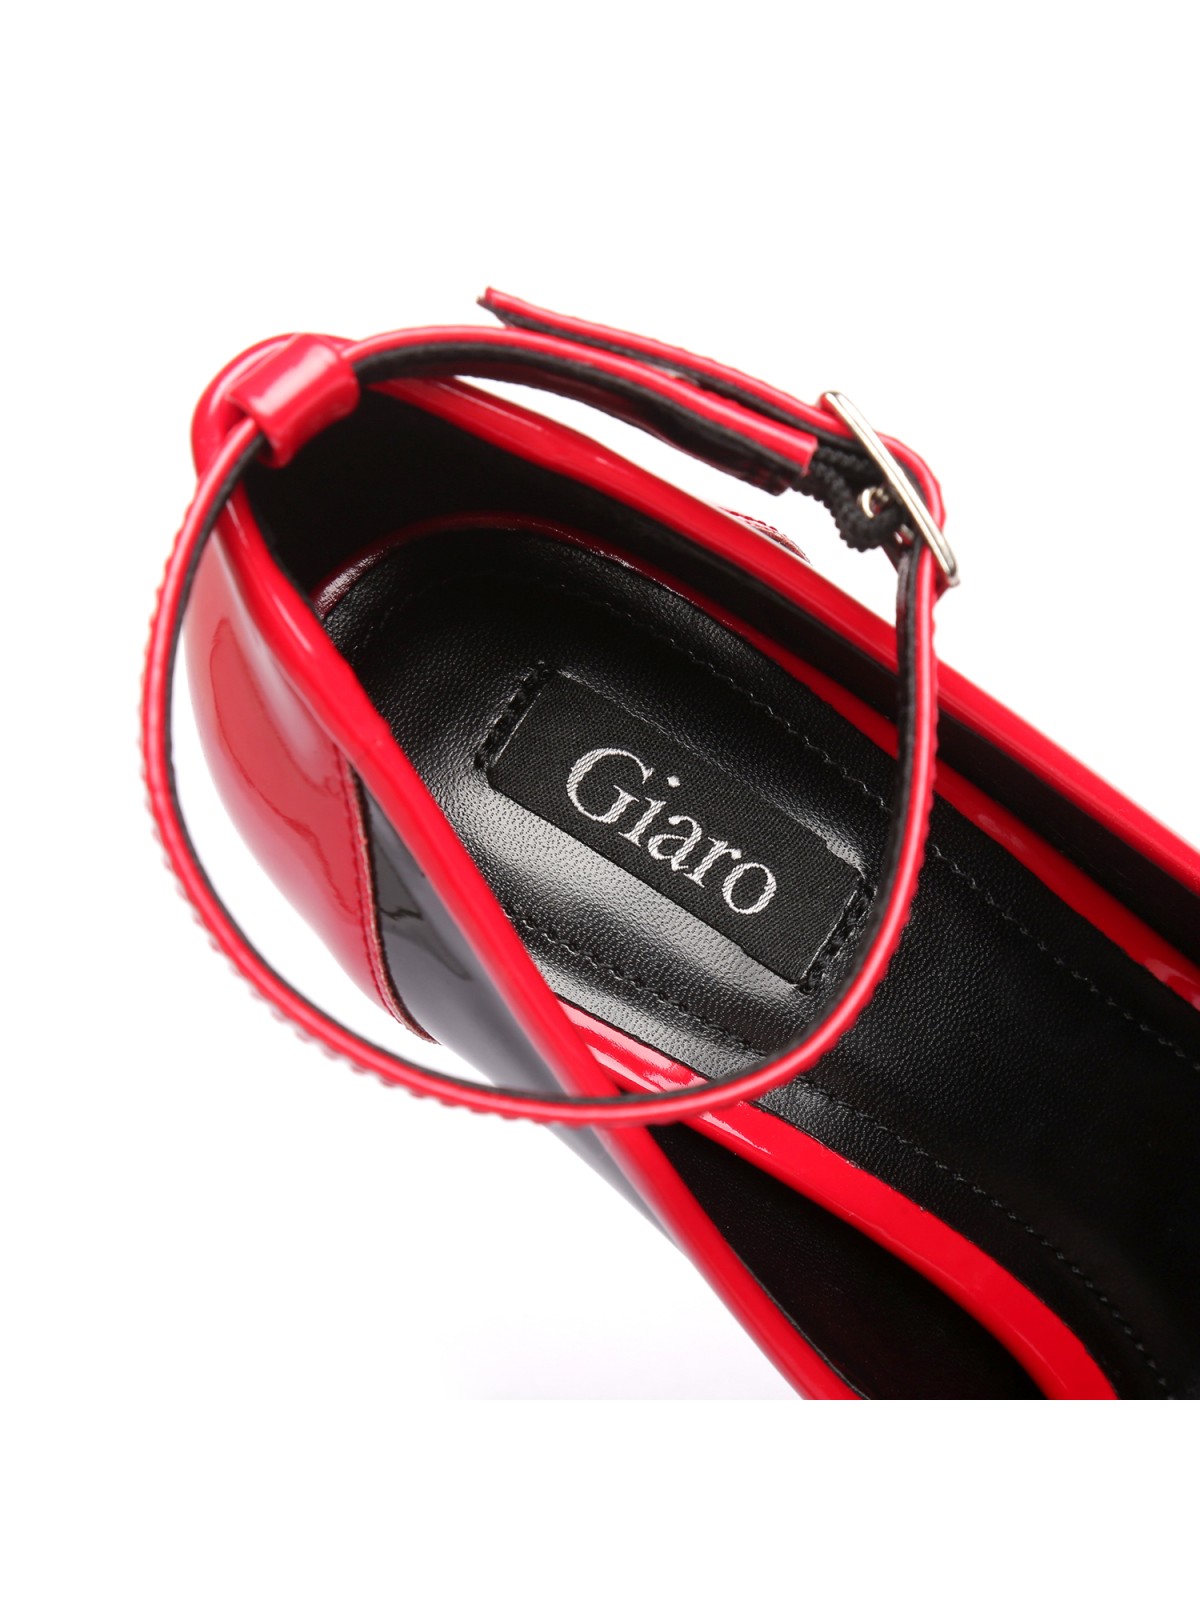 Giaro SLICK black shiny boots with 